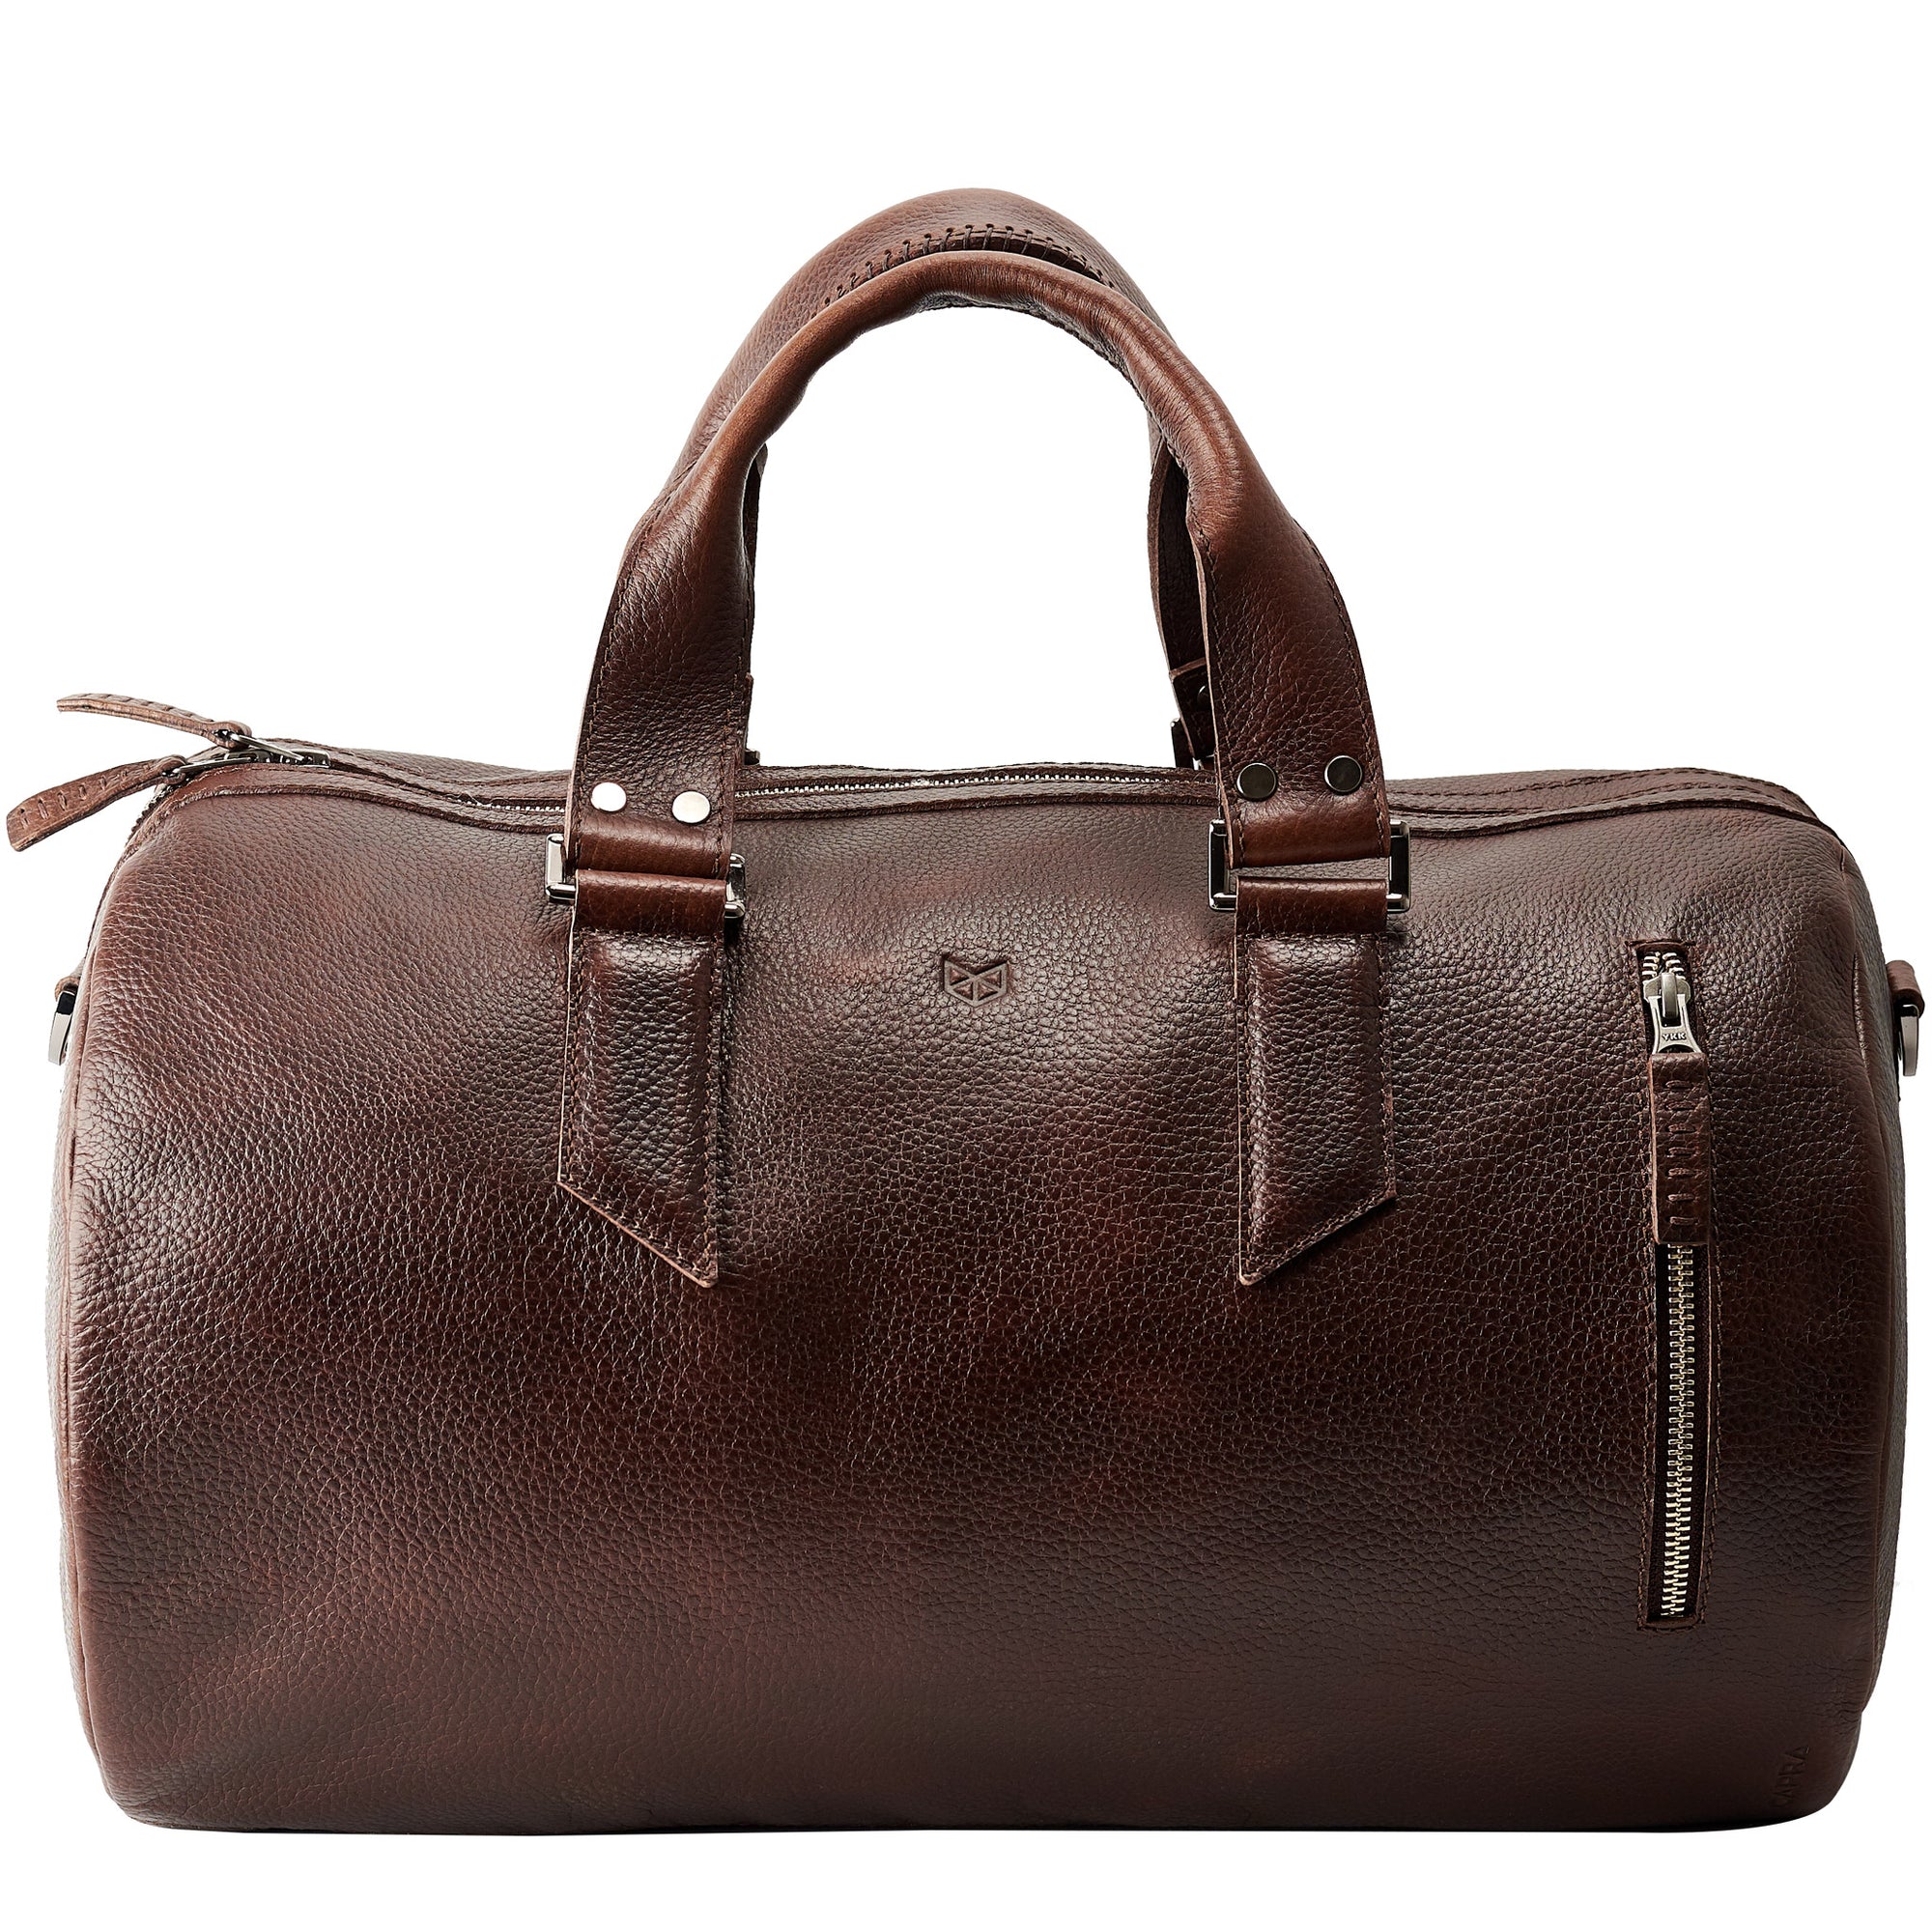 Dark Brown fashion leather duffle bag for men. Handmade designer handbag 